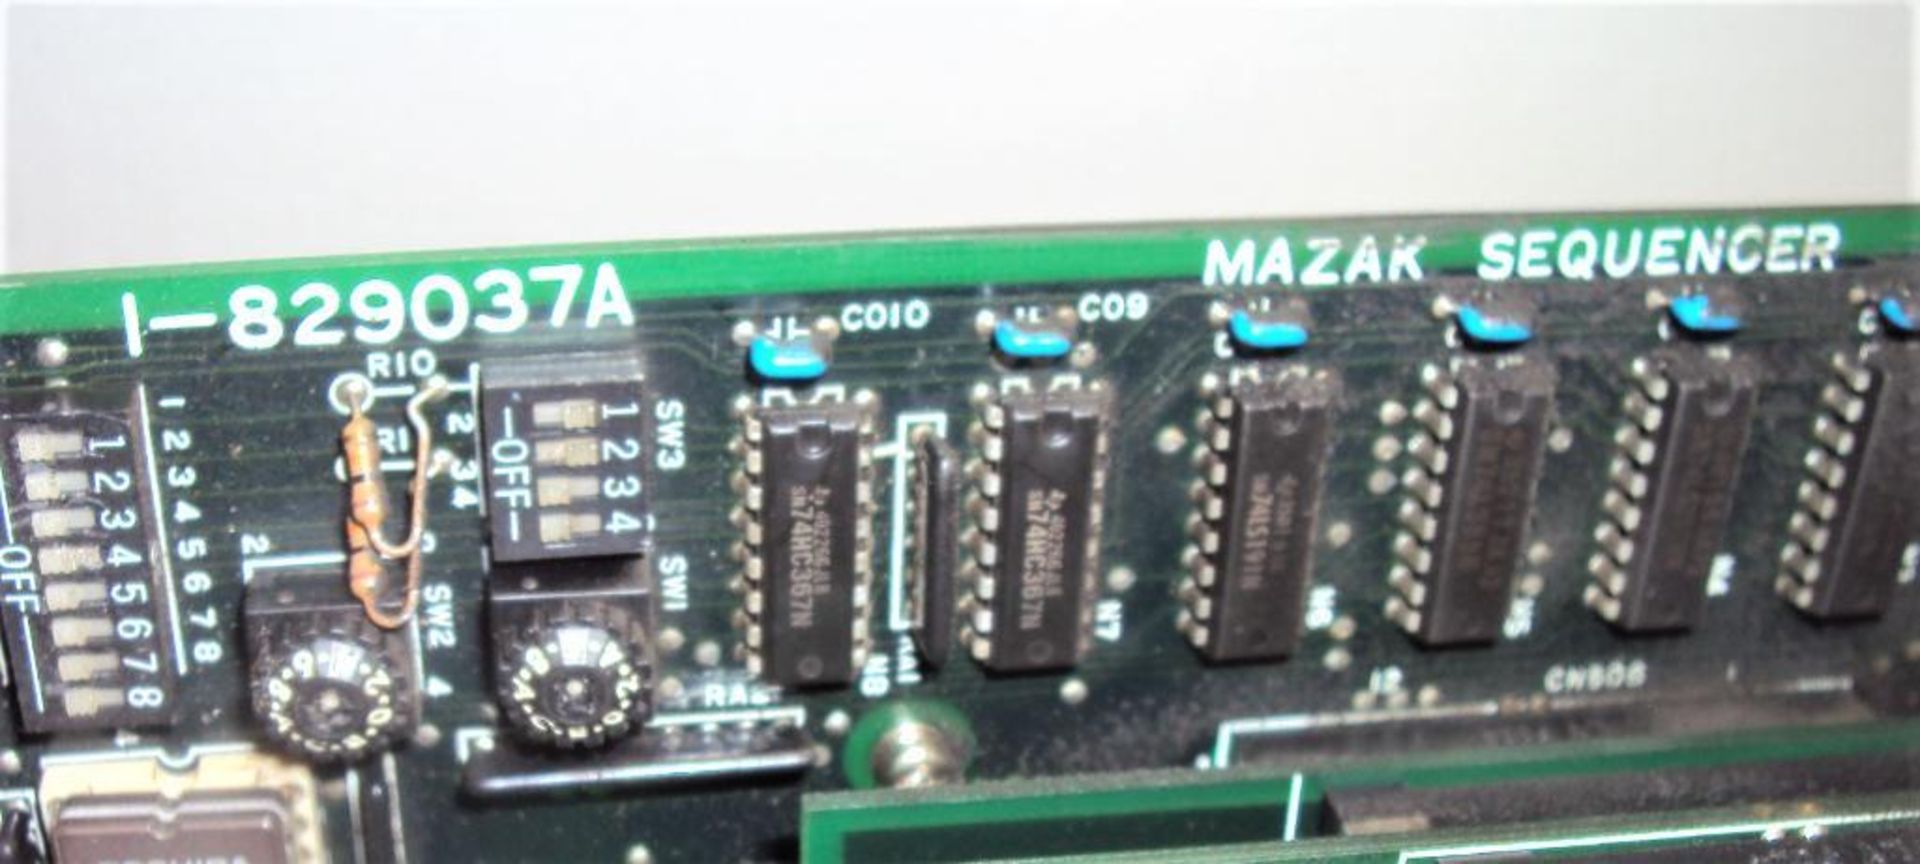 Mitsubishi Mazak Sequencer Board I-829037A - Image 4 of 5